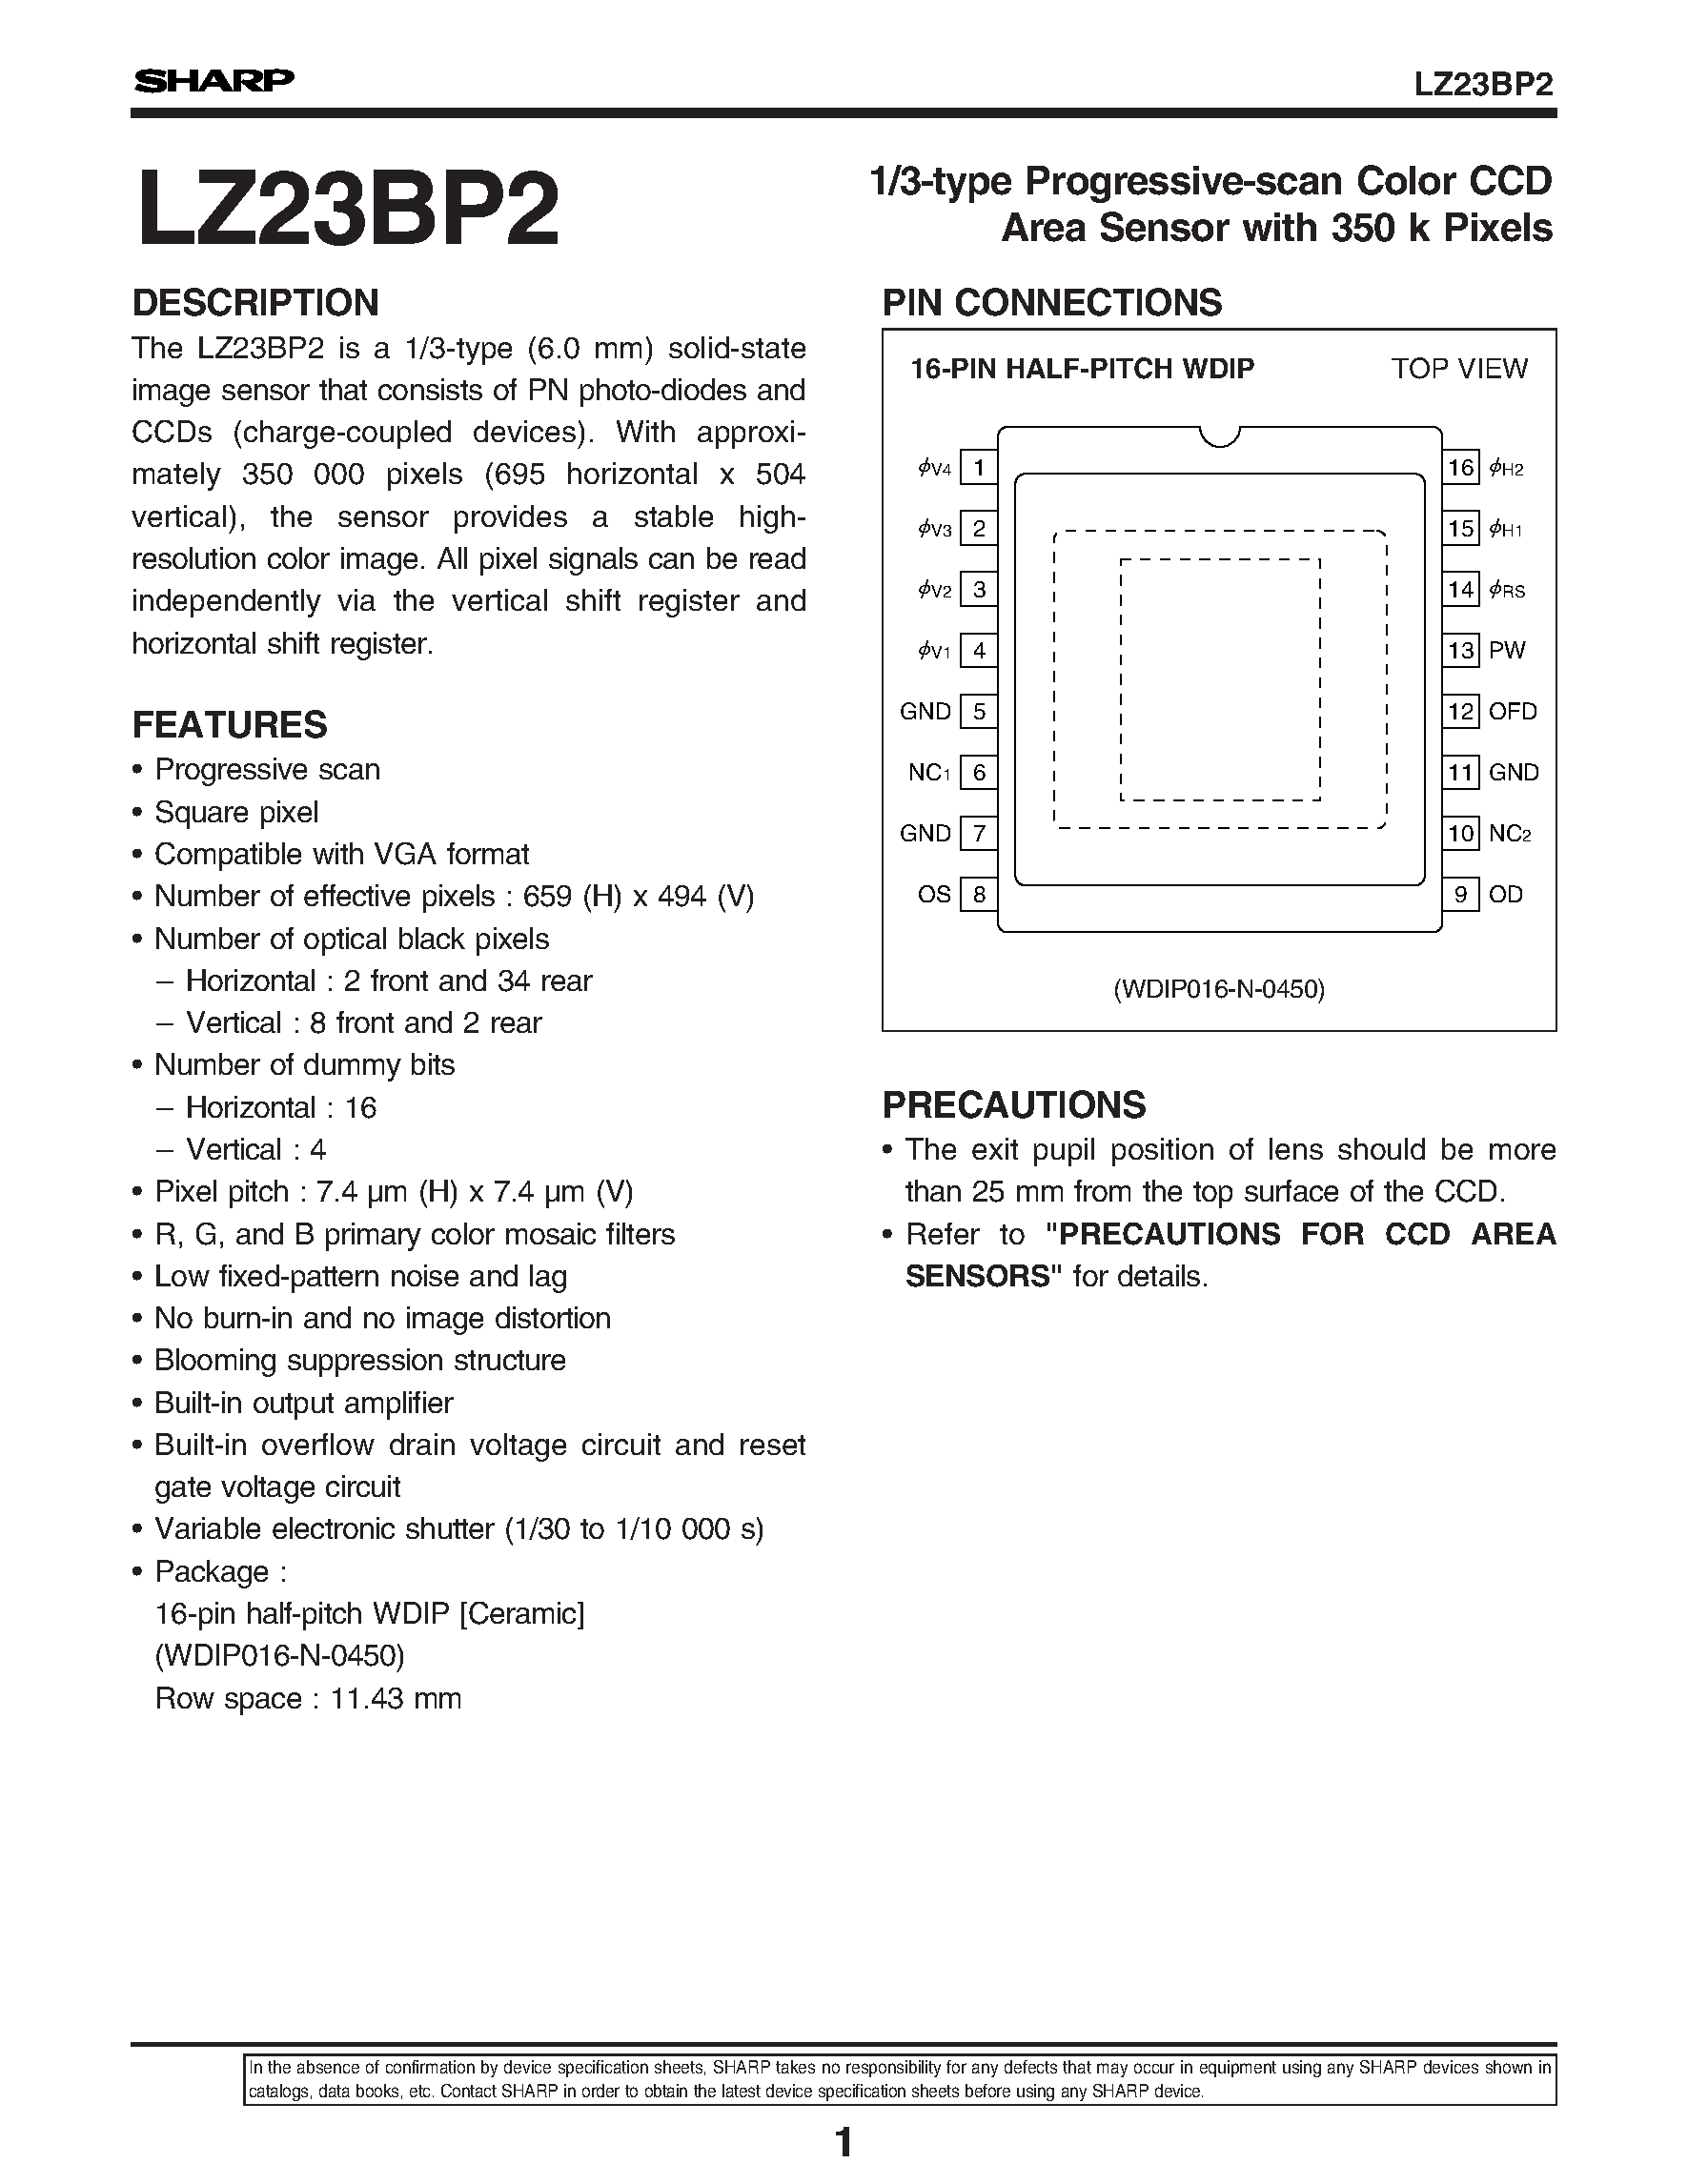 Datasheet LZ23BP2 - 1/3-type Progressive-scan Color CCD Area Sensor with 350 k Pixels page 1